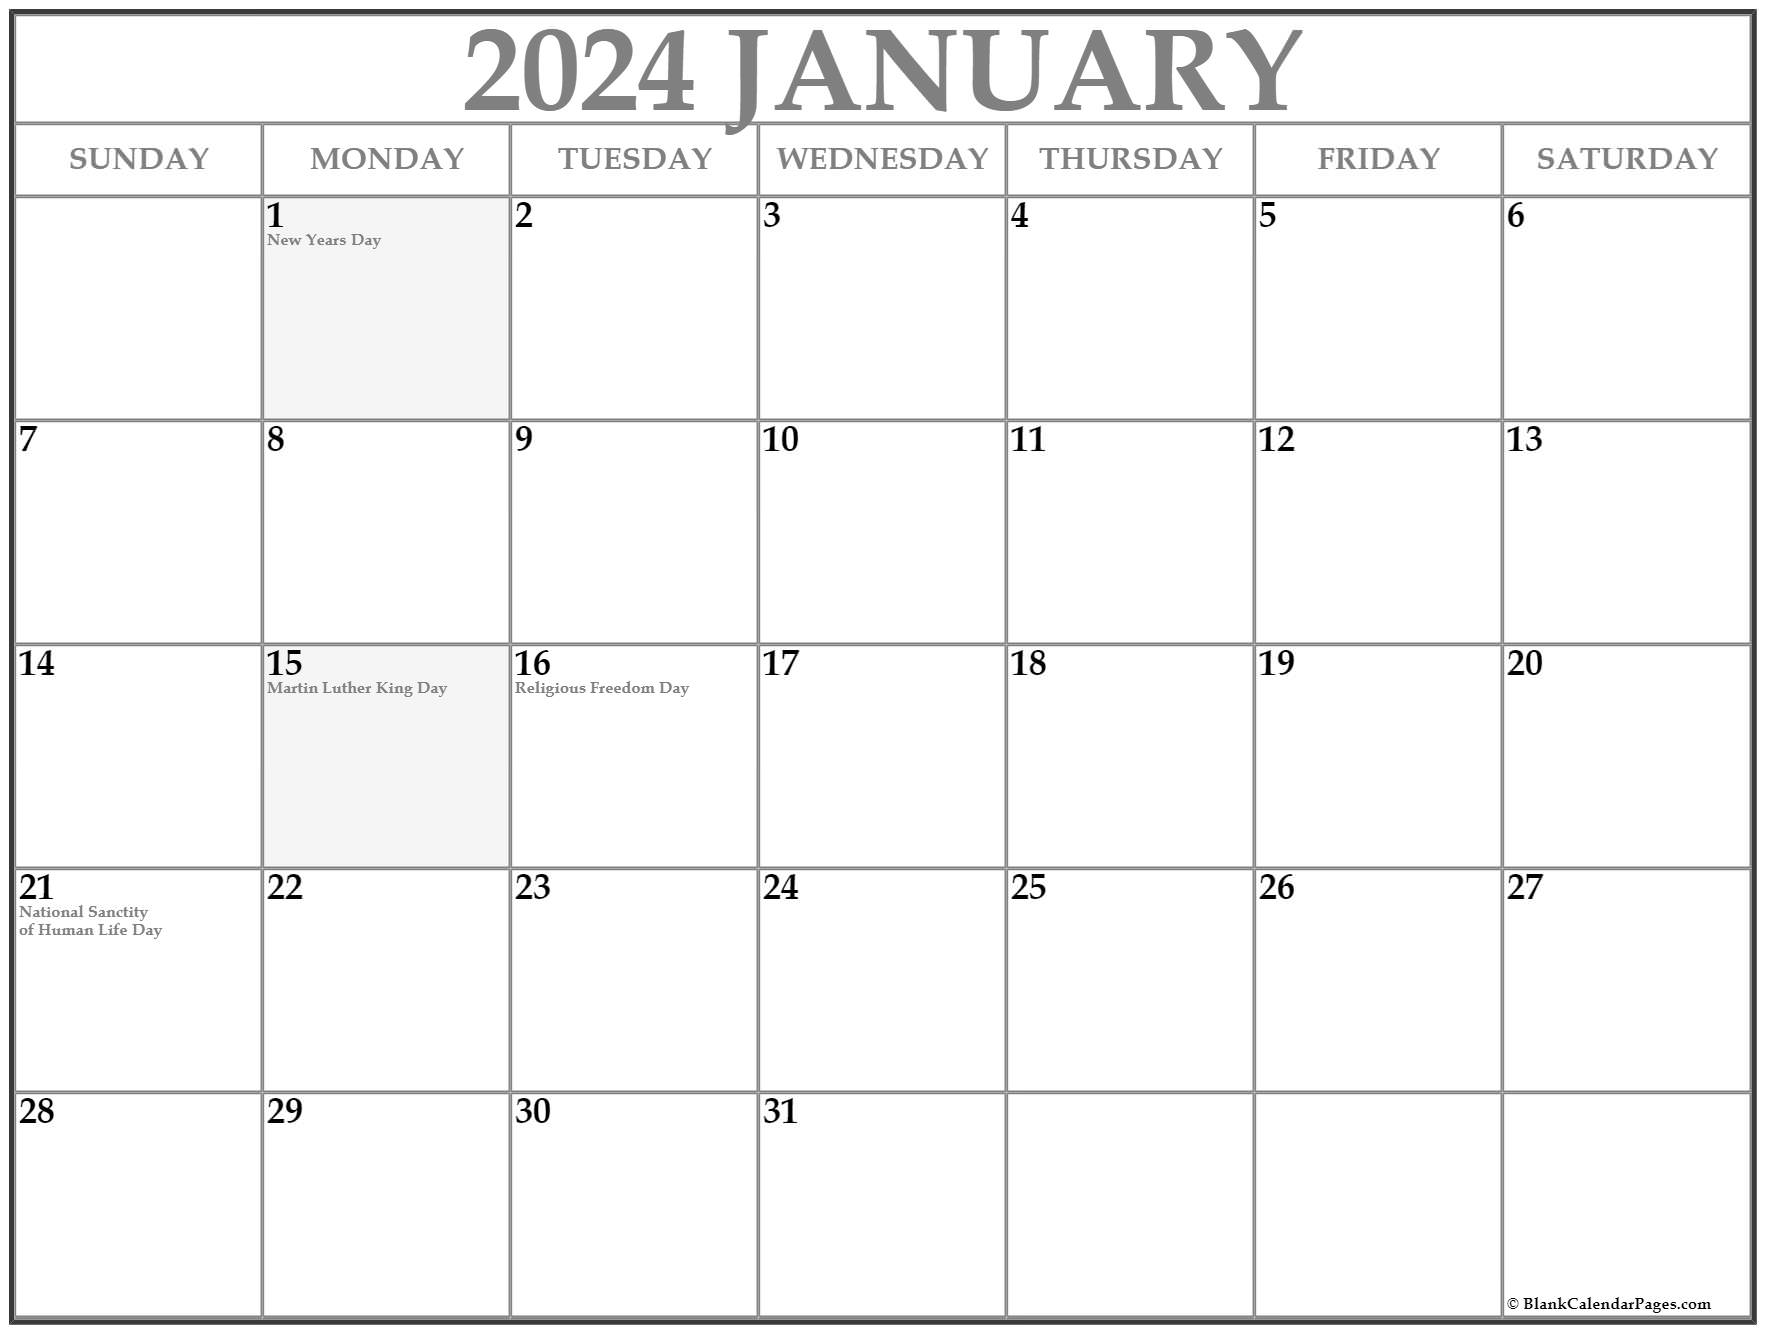 january-2024-bir-calendar-cool-latest-incredible-january-2024